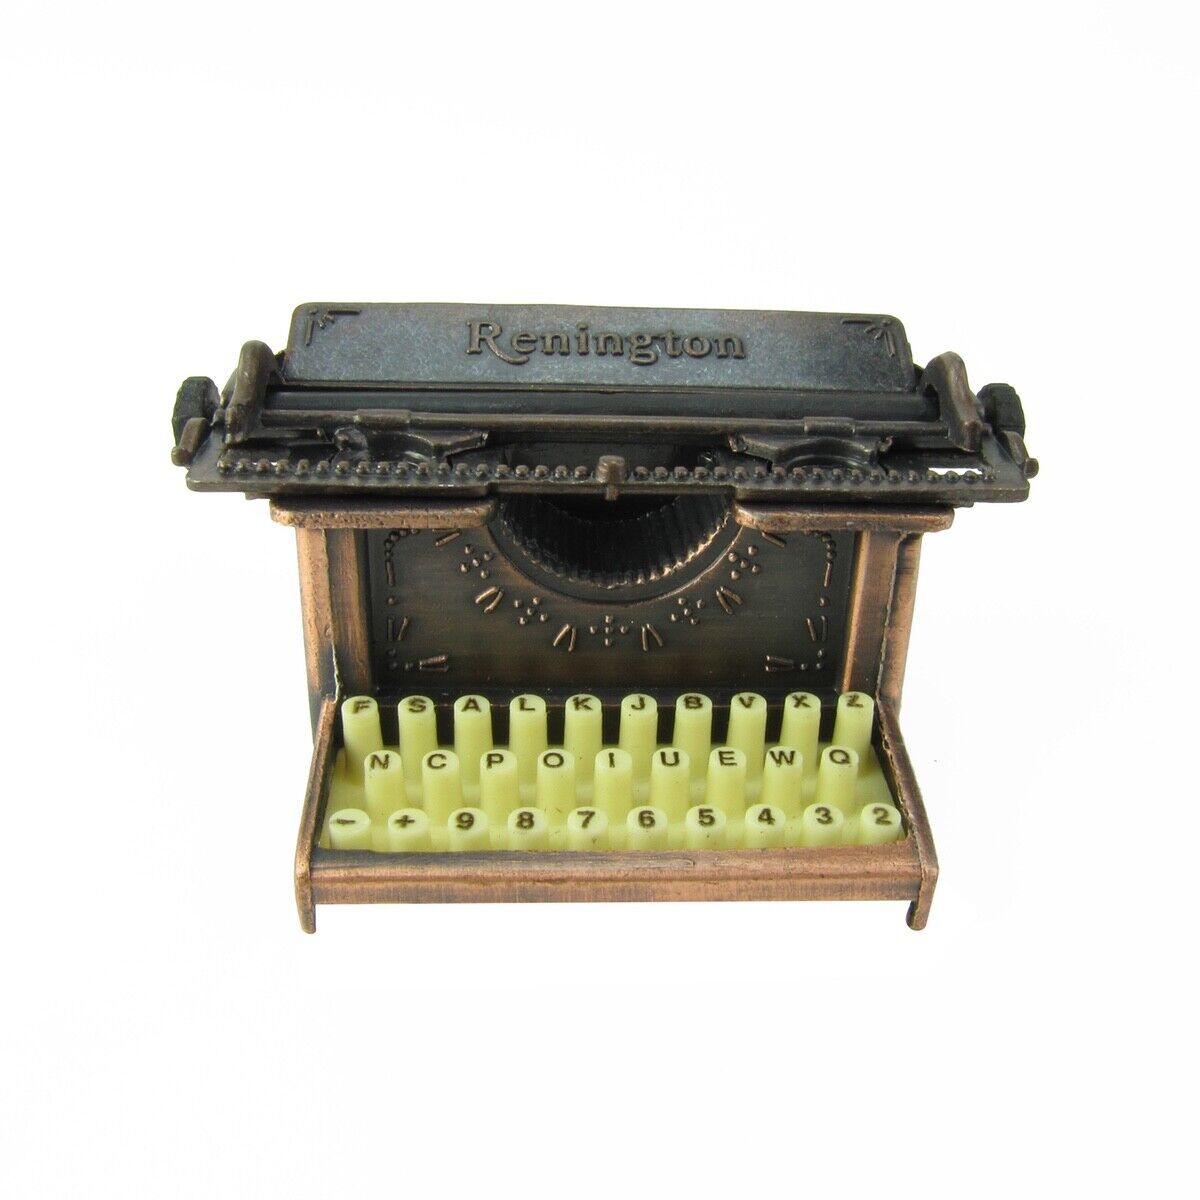 1:6 Scale Antique Typewriter Diorama/Dollhouse Accessory/Metal Pencil Sharpener